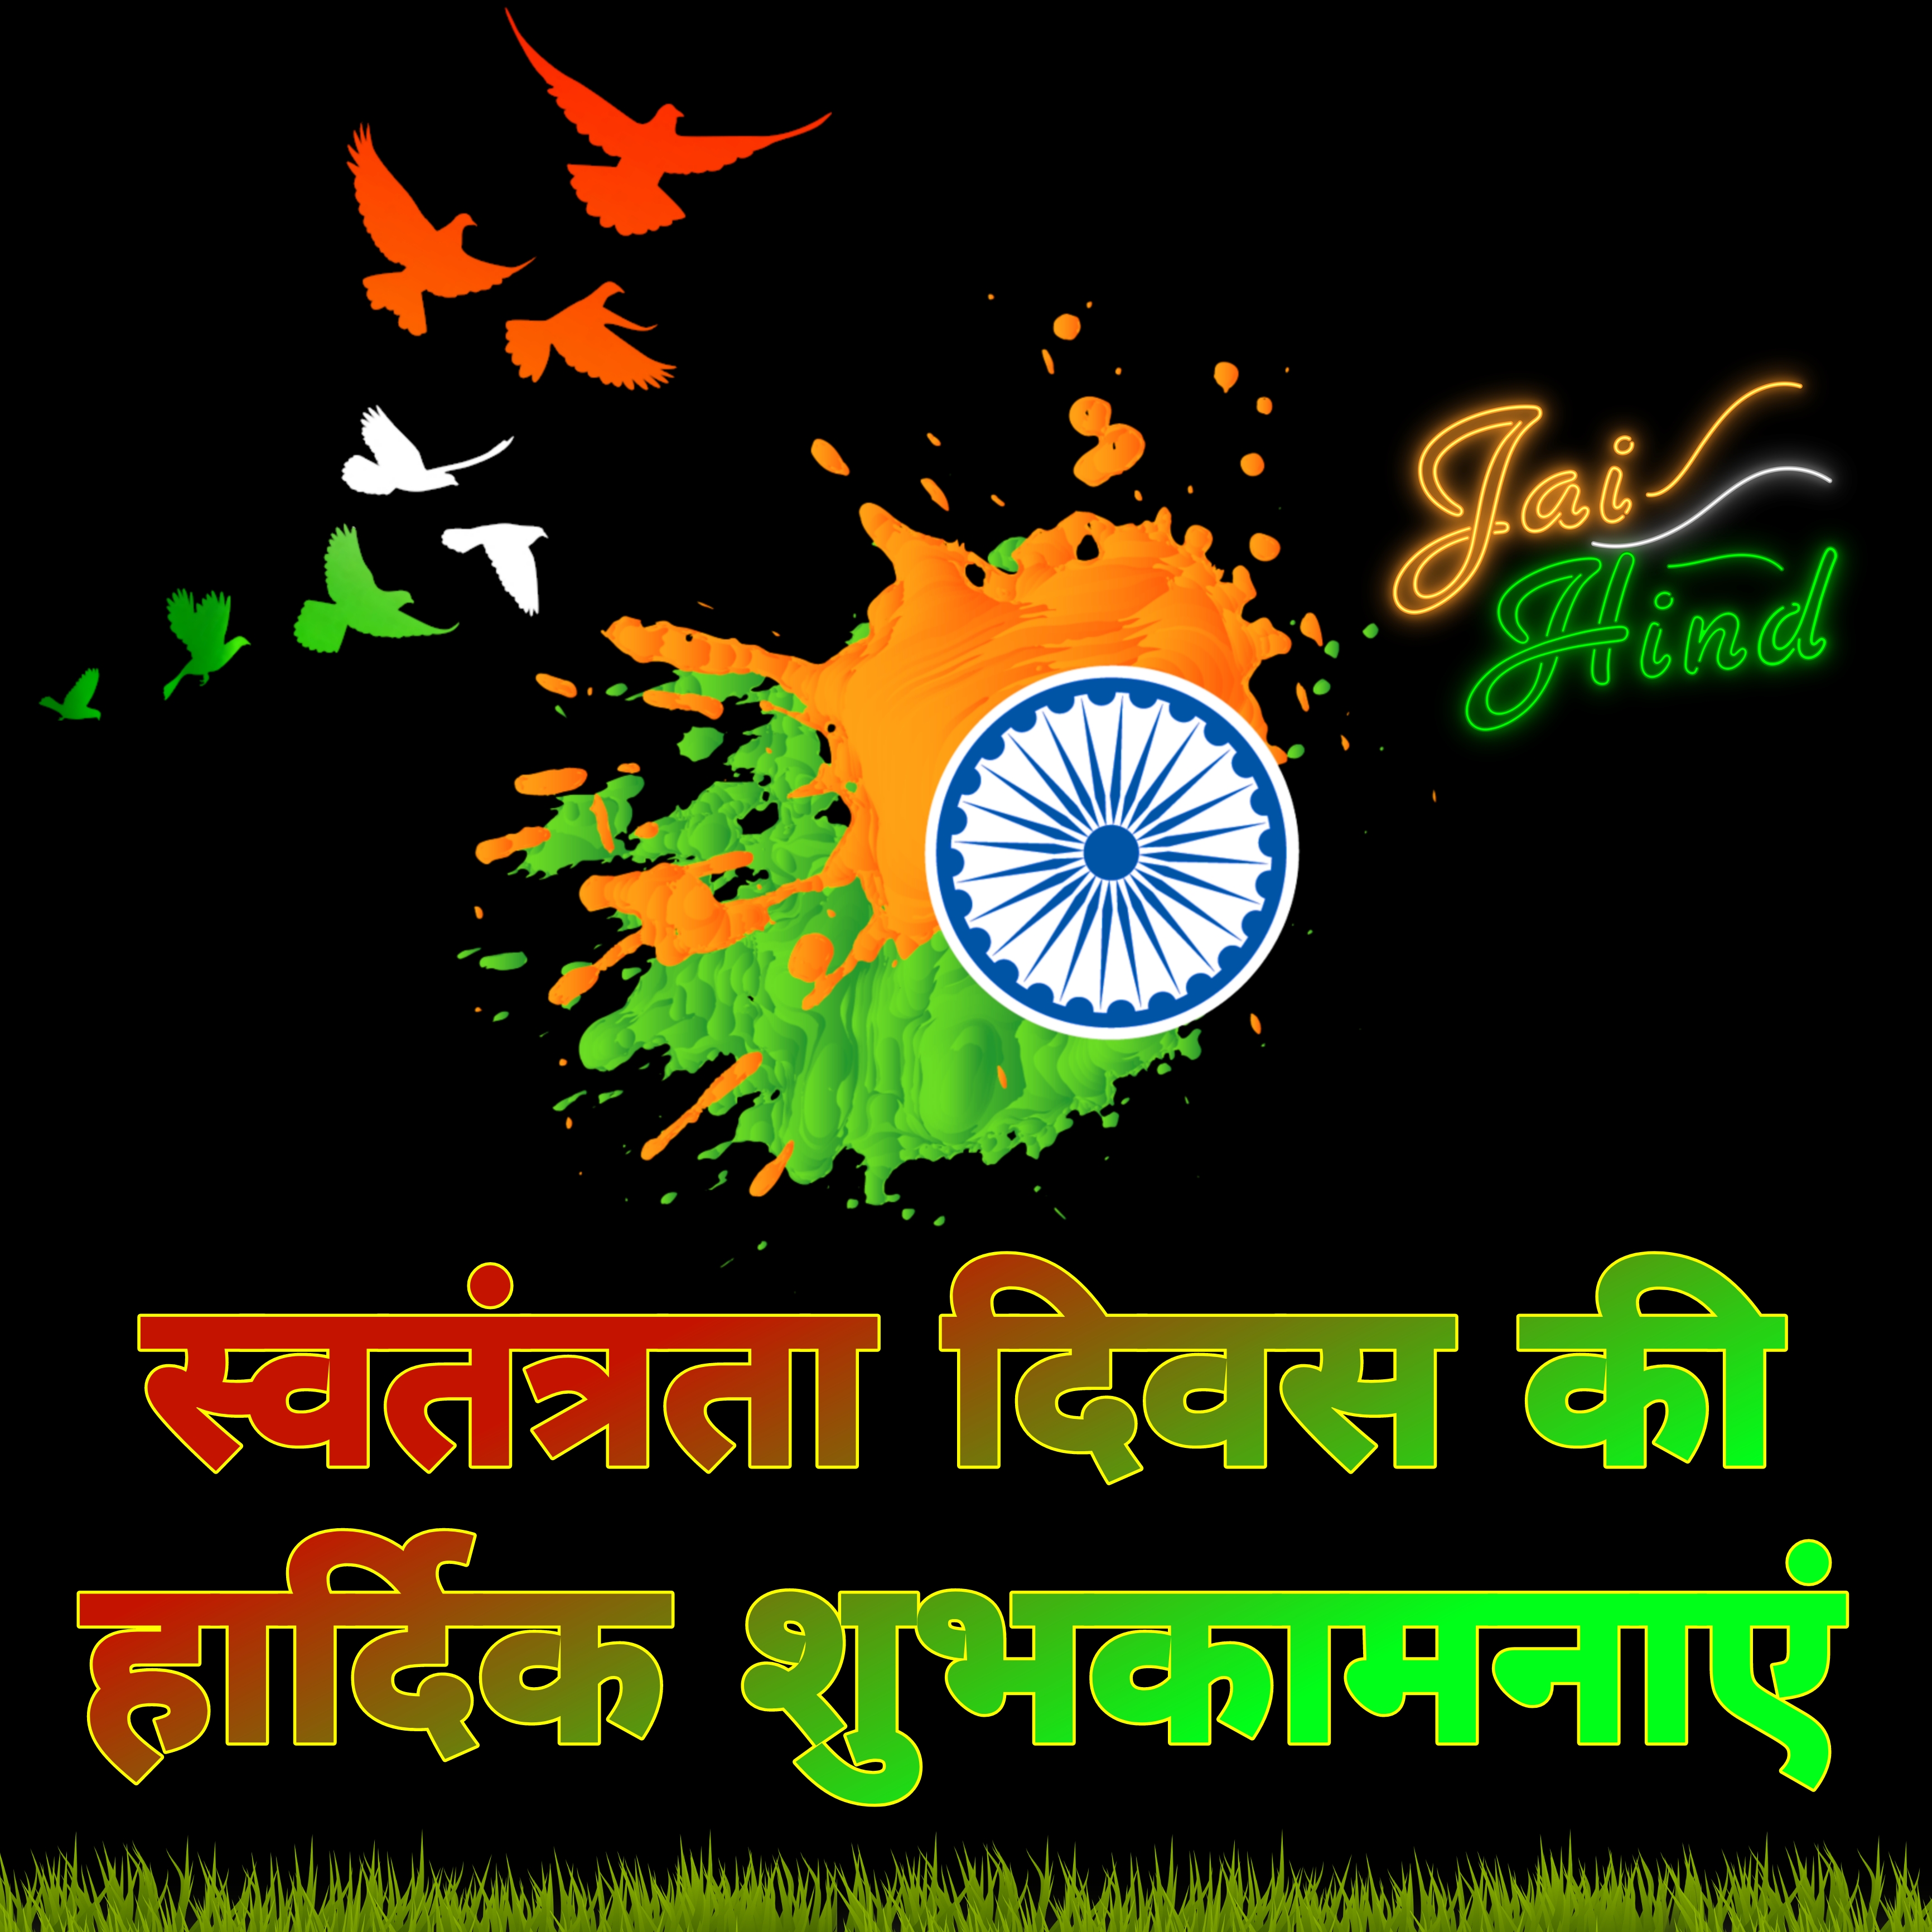 स्वतंत्रता दिवस की हार्दिक शुभकामनाएं | Swatantrata diwas ki shubhkamnaye photo